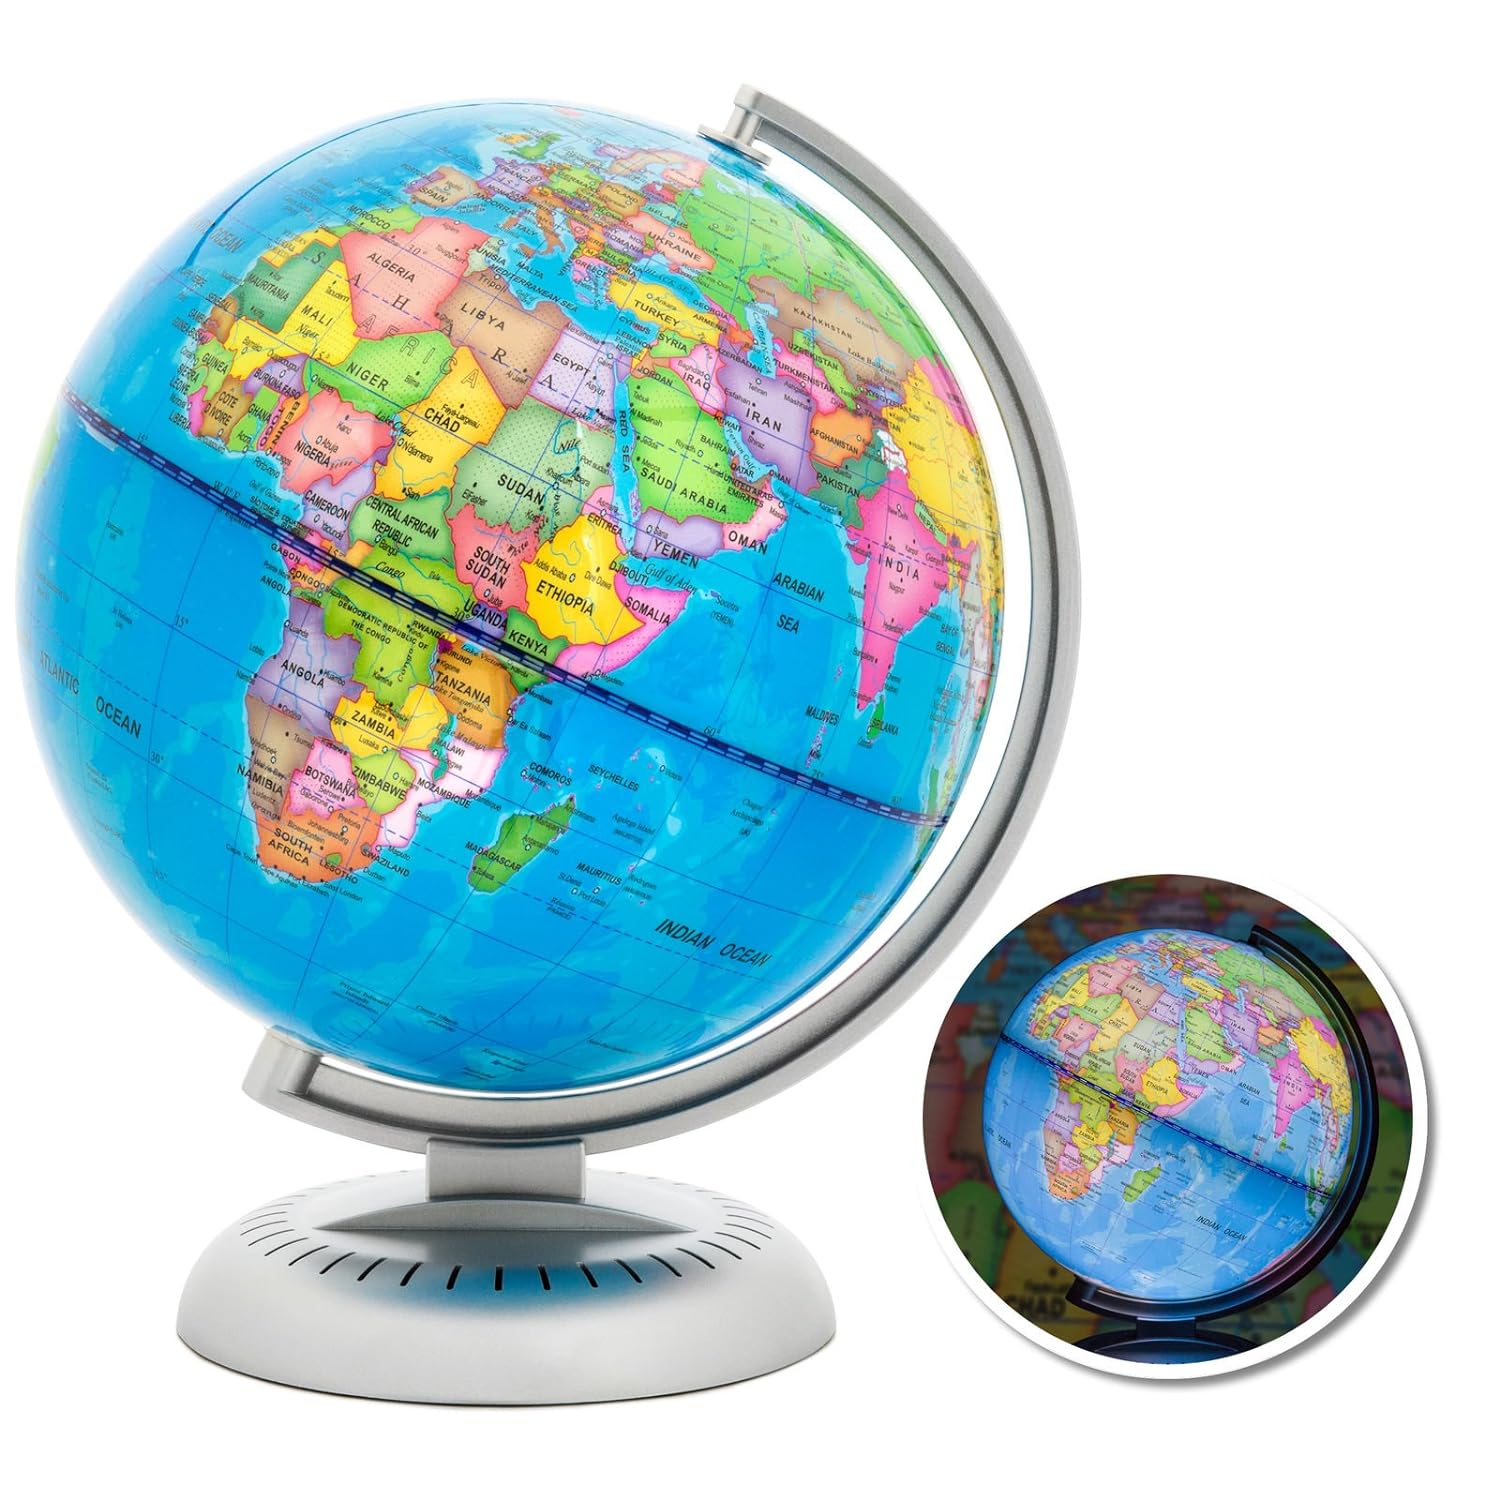 Globe with multi-language translations